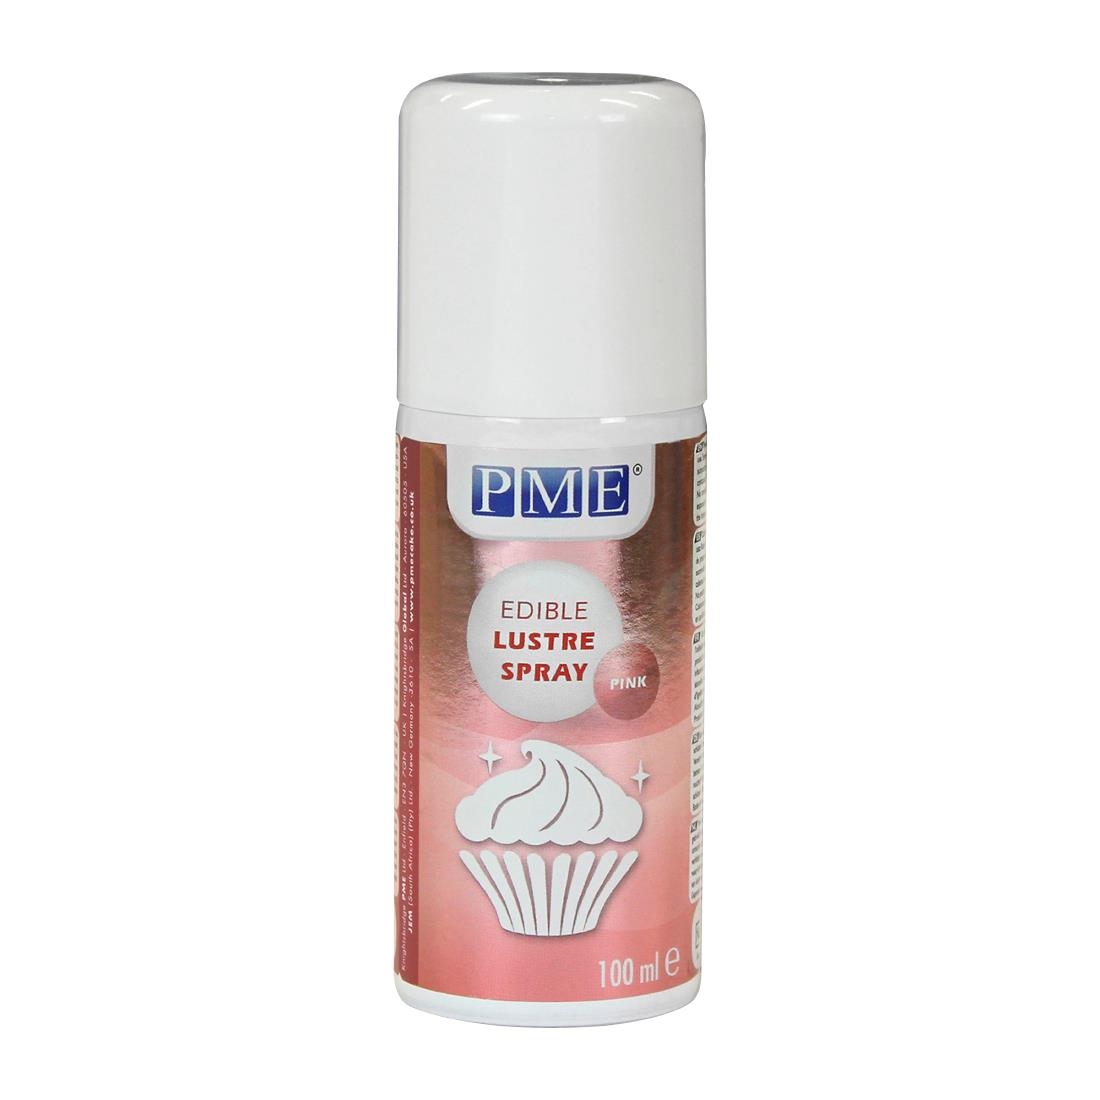 PME Edible Lustre Spray 100ml - Pink (HU203)